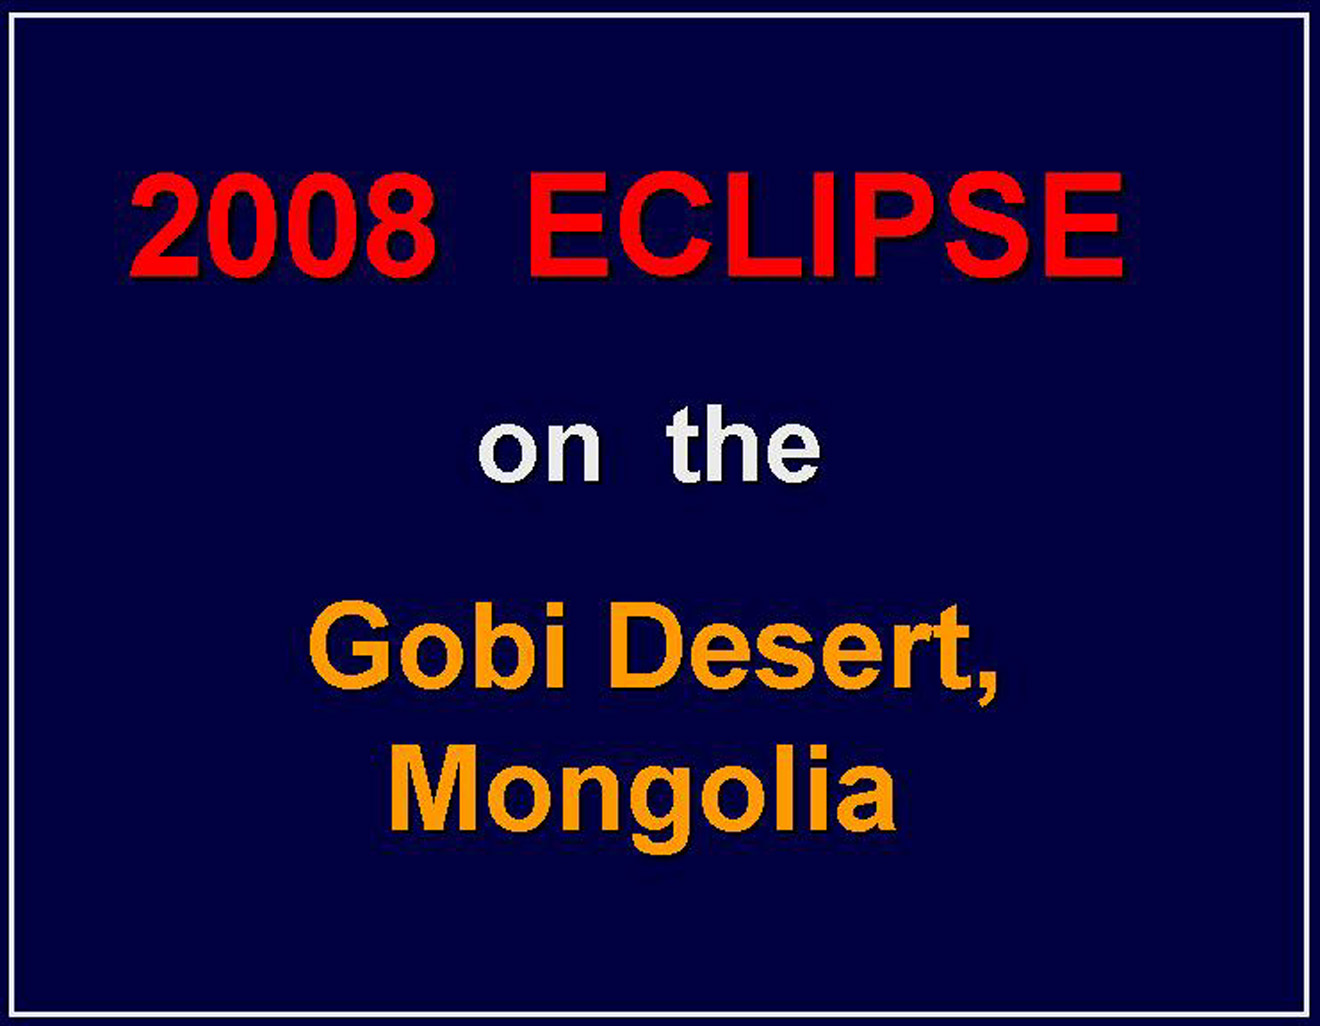 Eclipse 2008 - A01 - Slide17 - Title